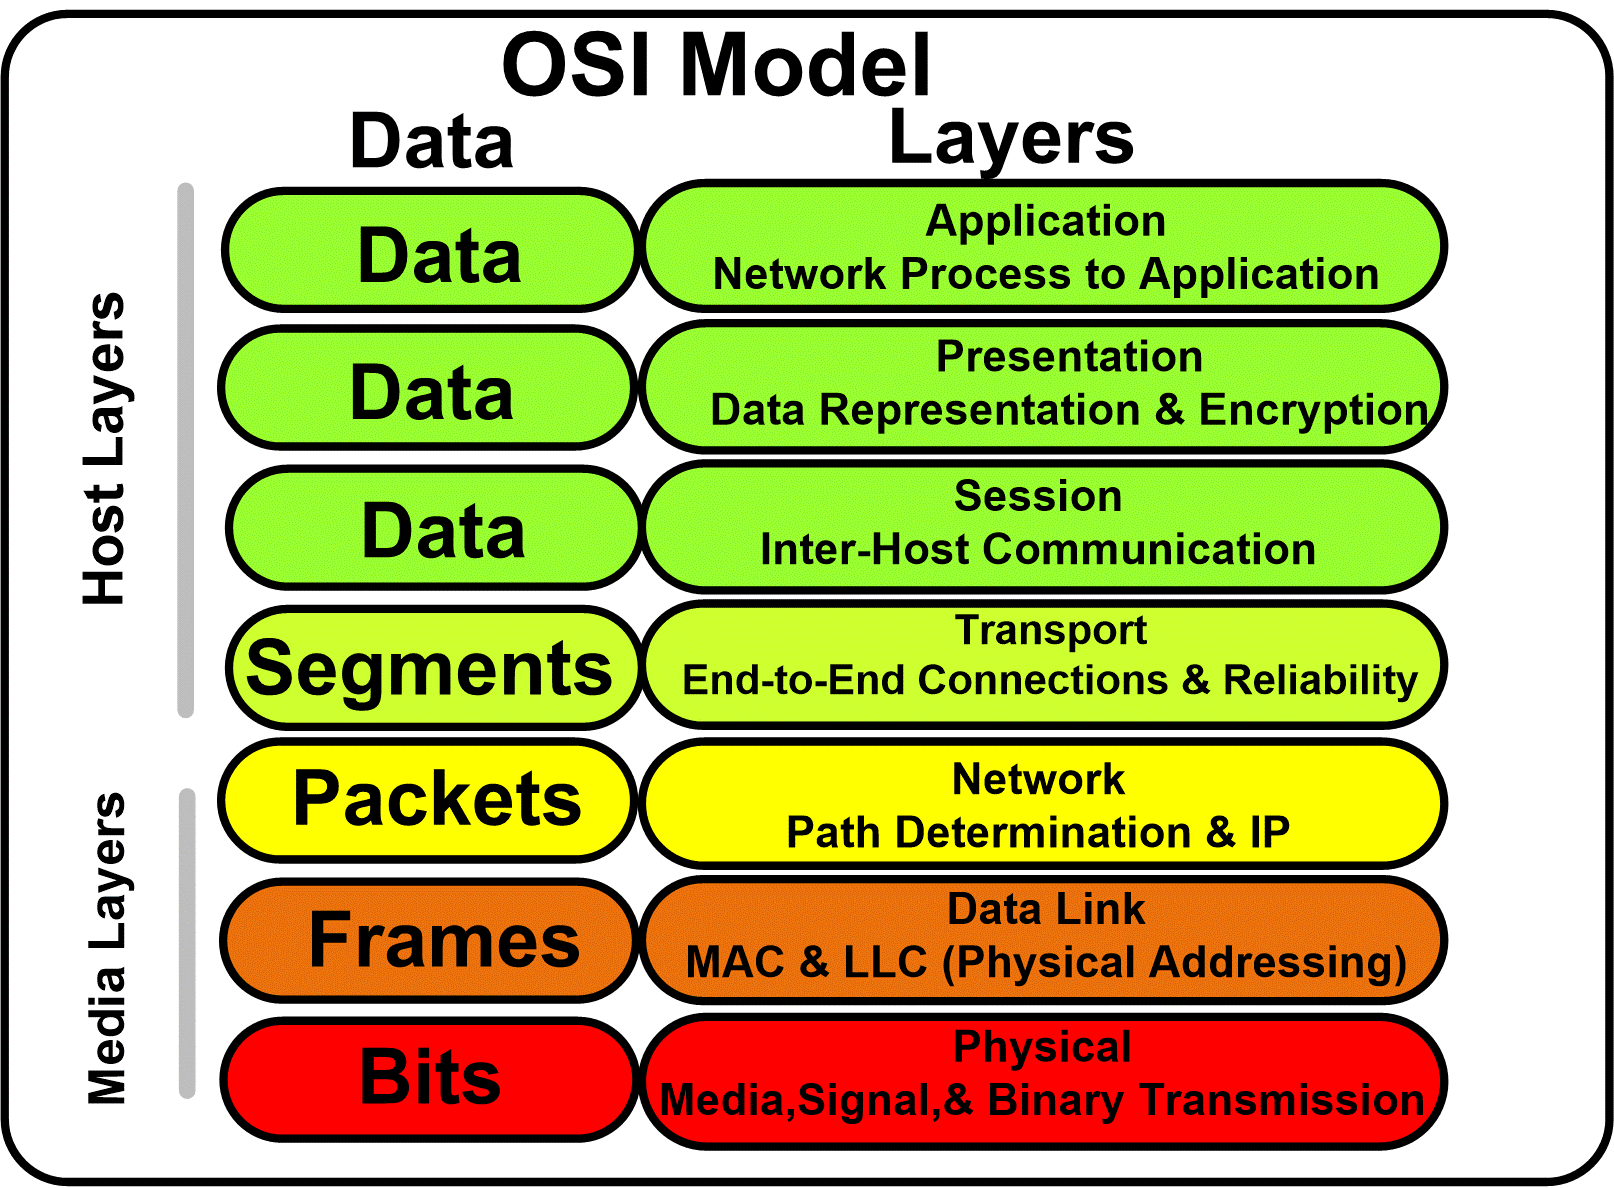 Services In Osi Model